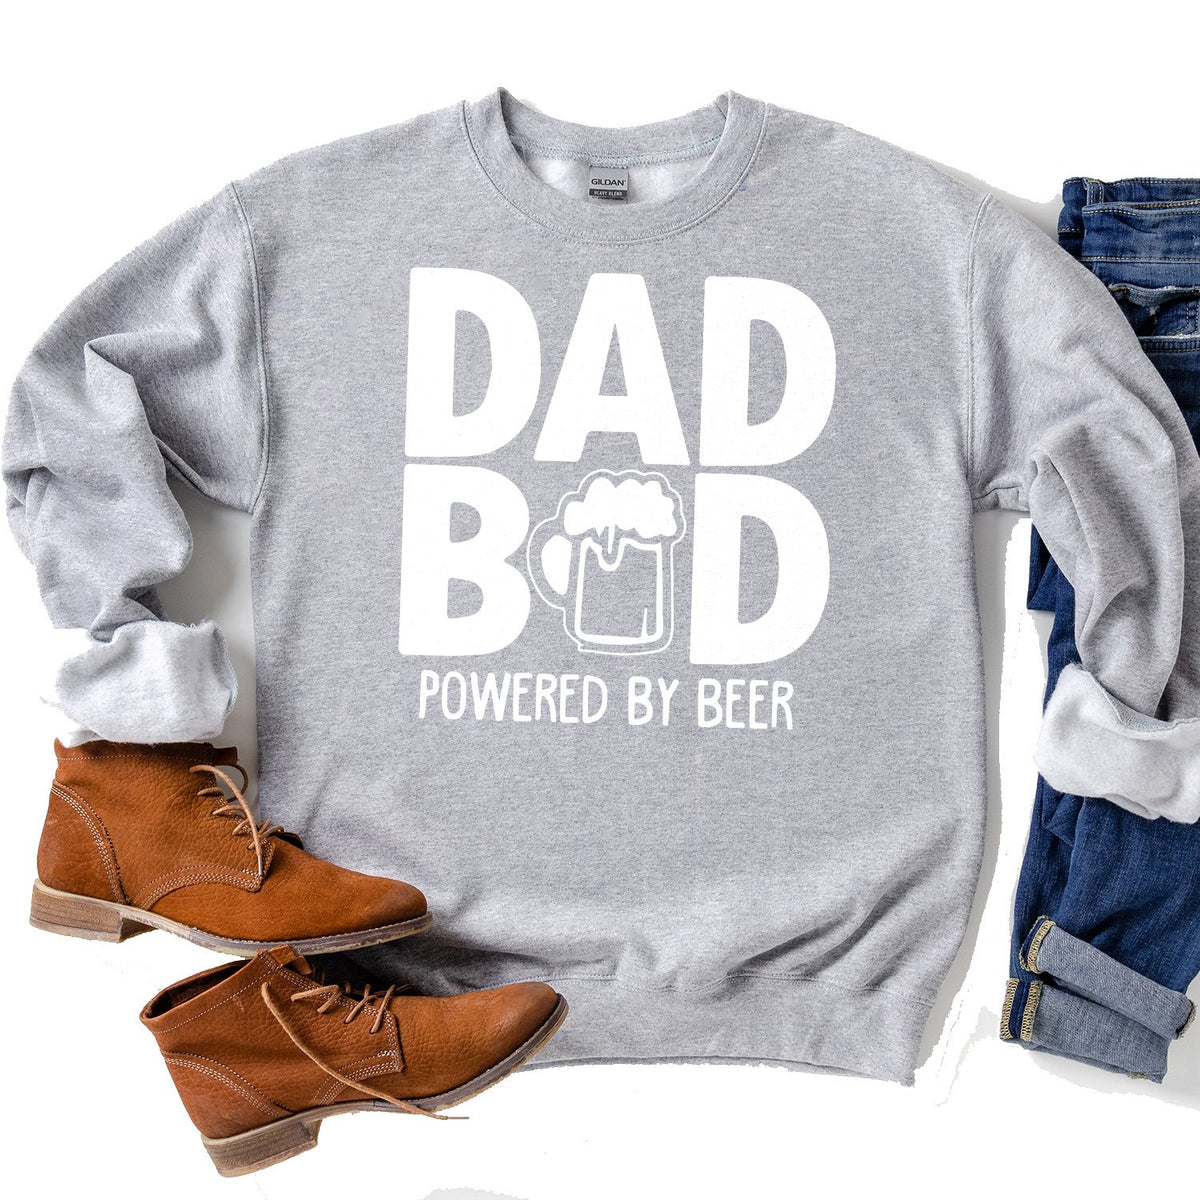 Dad Bod Powered By Beer - Long Sleeve Heavy Crewneck Sweatshirt